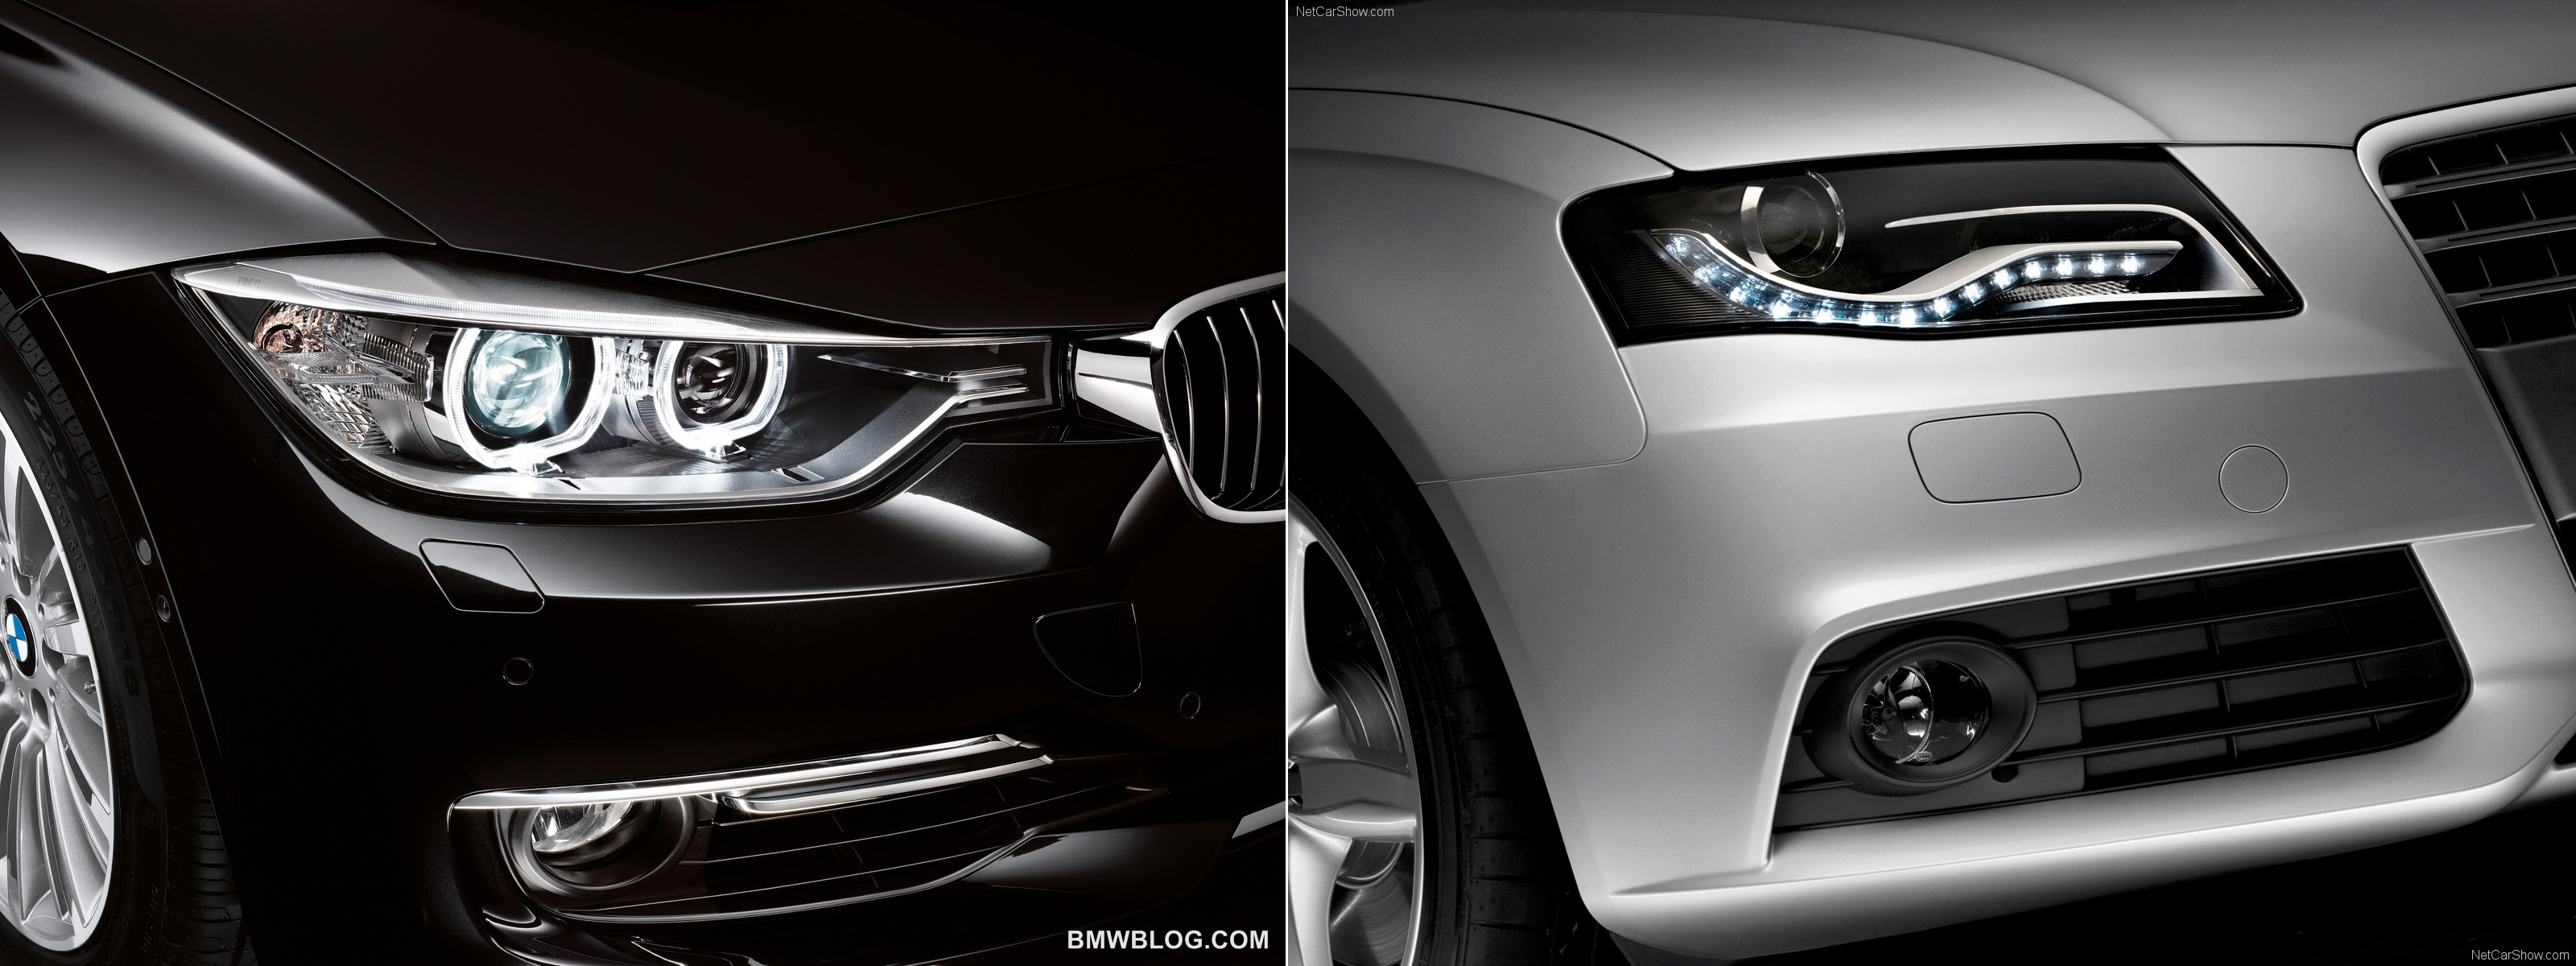 BMW-3-series-vs-audi-a4-photo10.jpg